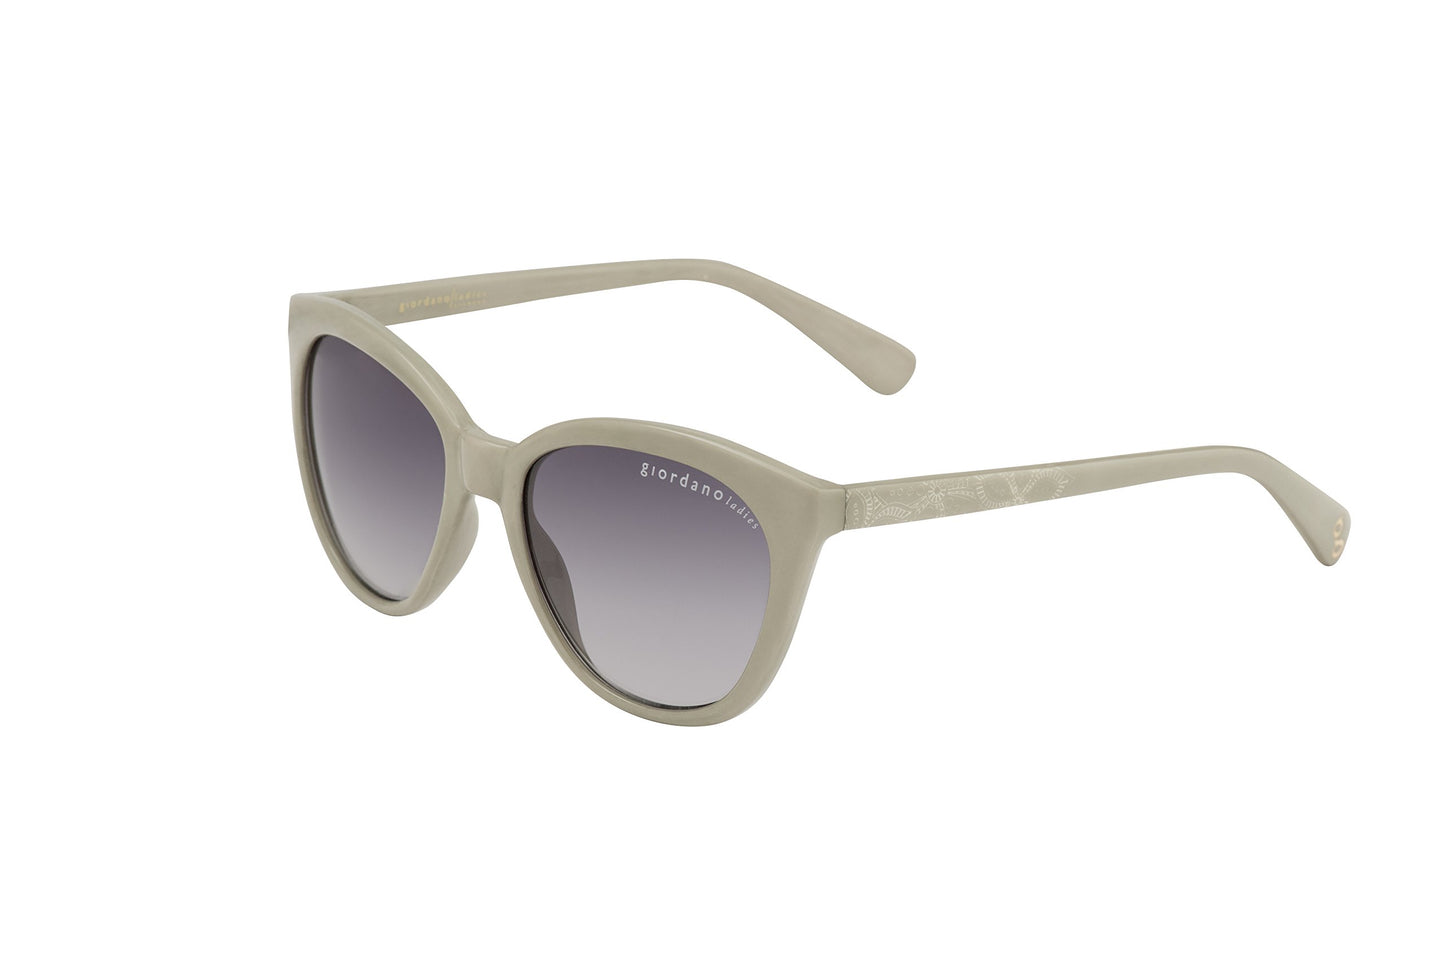 Giordano UV Protected Cat Eye Women Sunglasses - (GLS801C003|51|Grey Gradient lens)